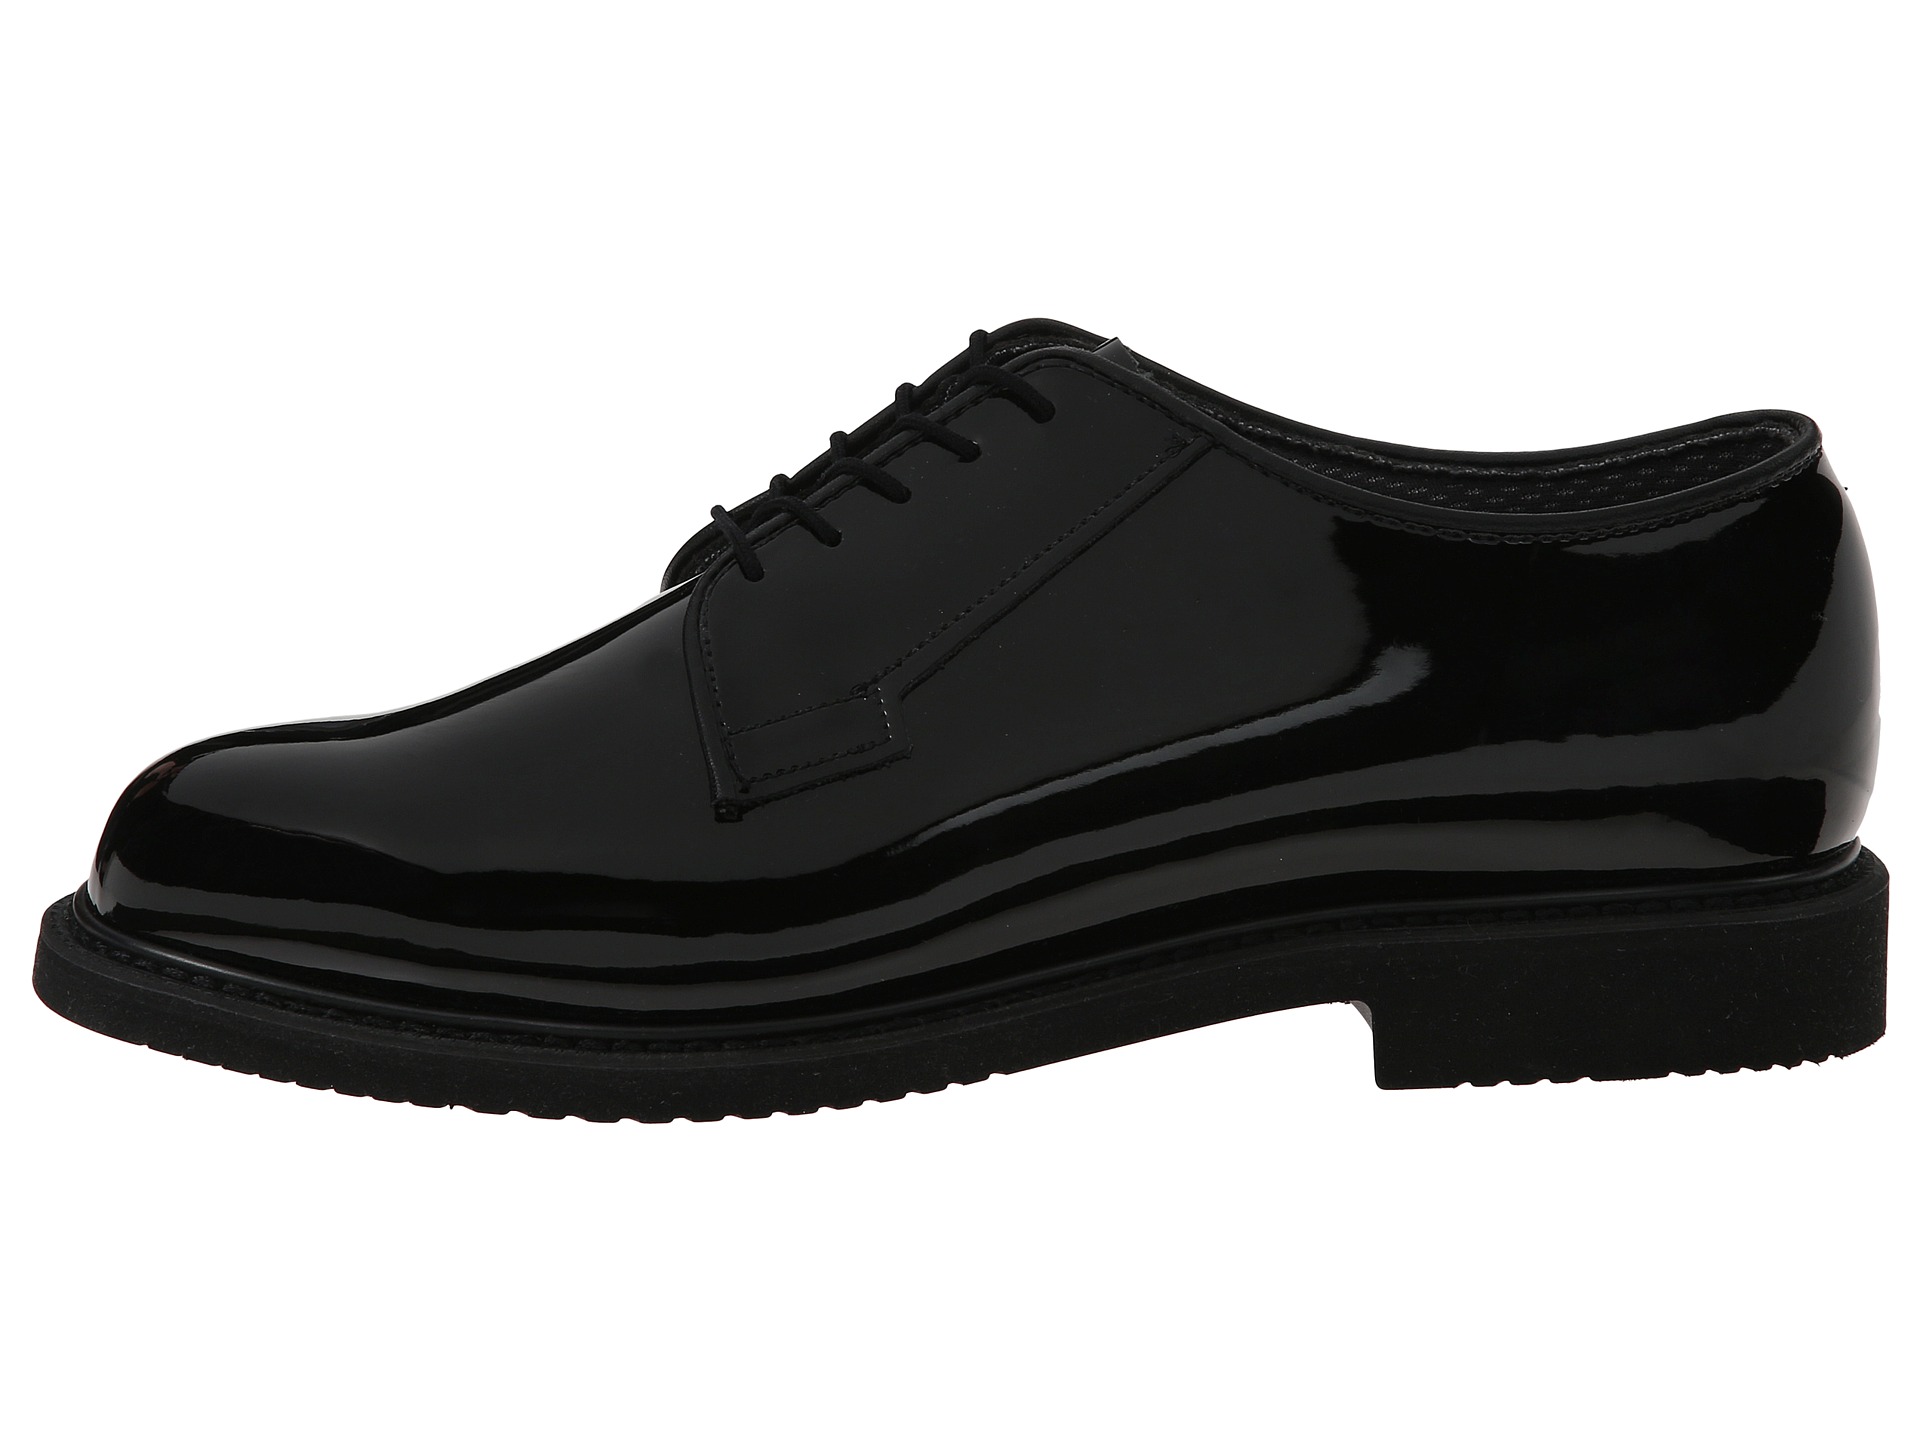 Bates Footwear Lites® Black High Gloss at Zappos.com